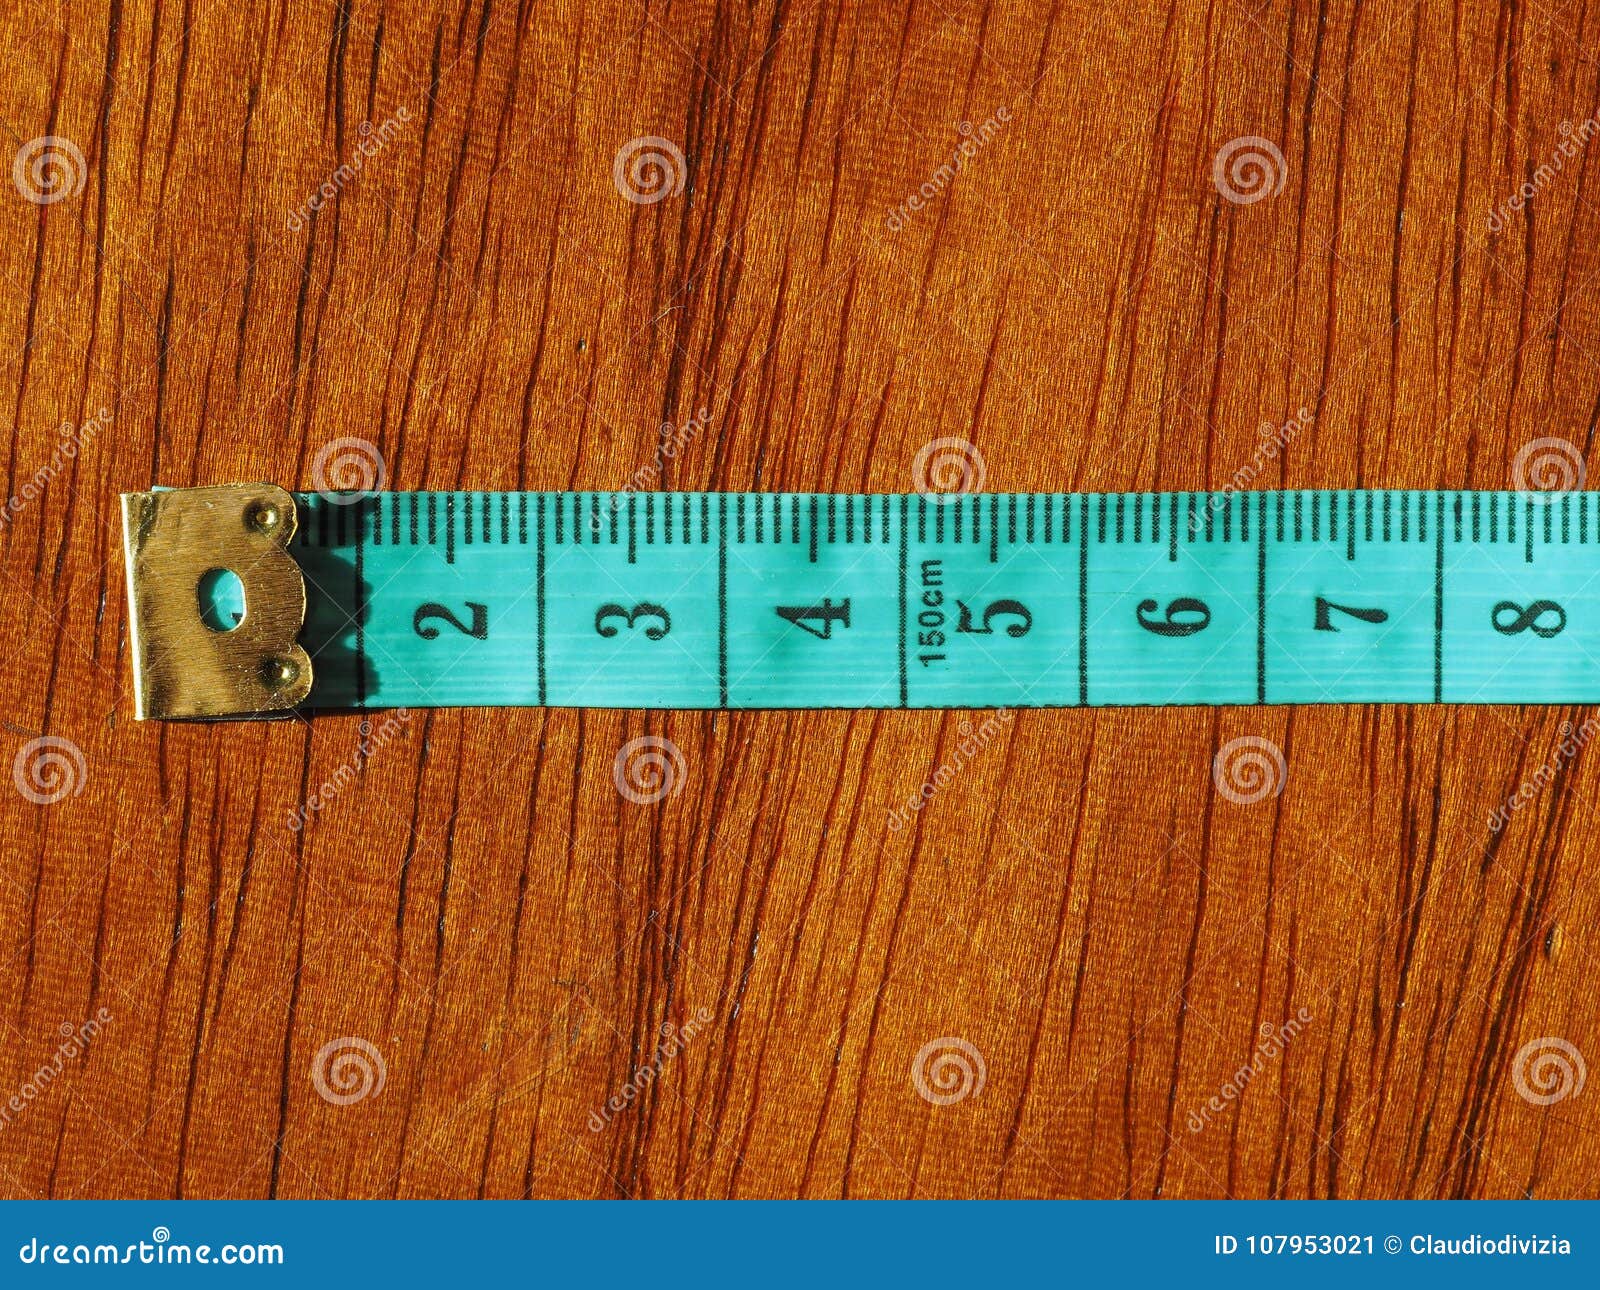 https://thumbs.dreamstime.com/z/tailor-meter-ruler-soft-tailor-meter-ruler-metric-units-wooden-desk-107953021.jpg